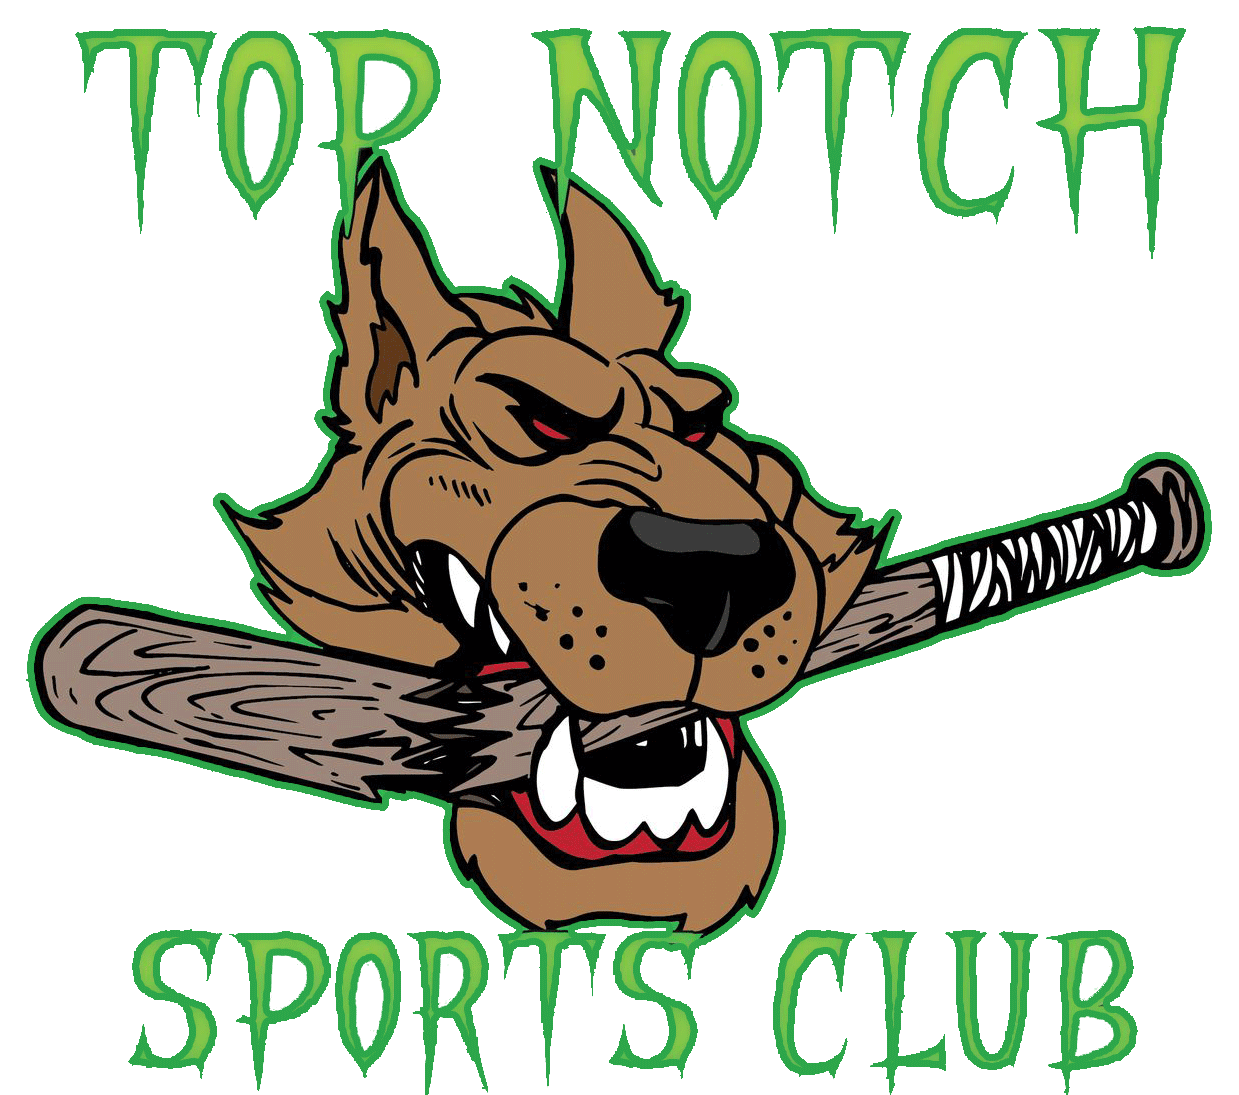 top-notch-sports-logo